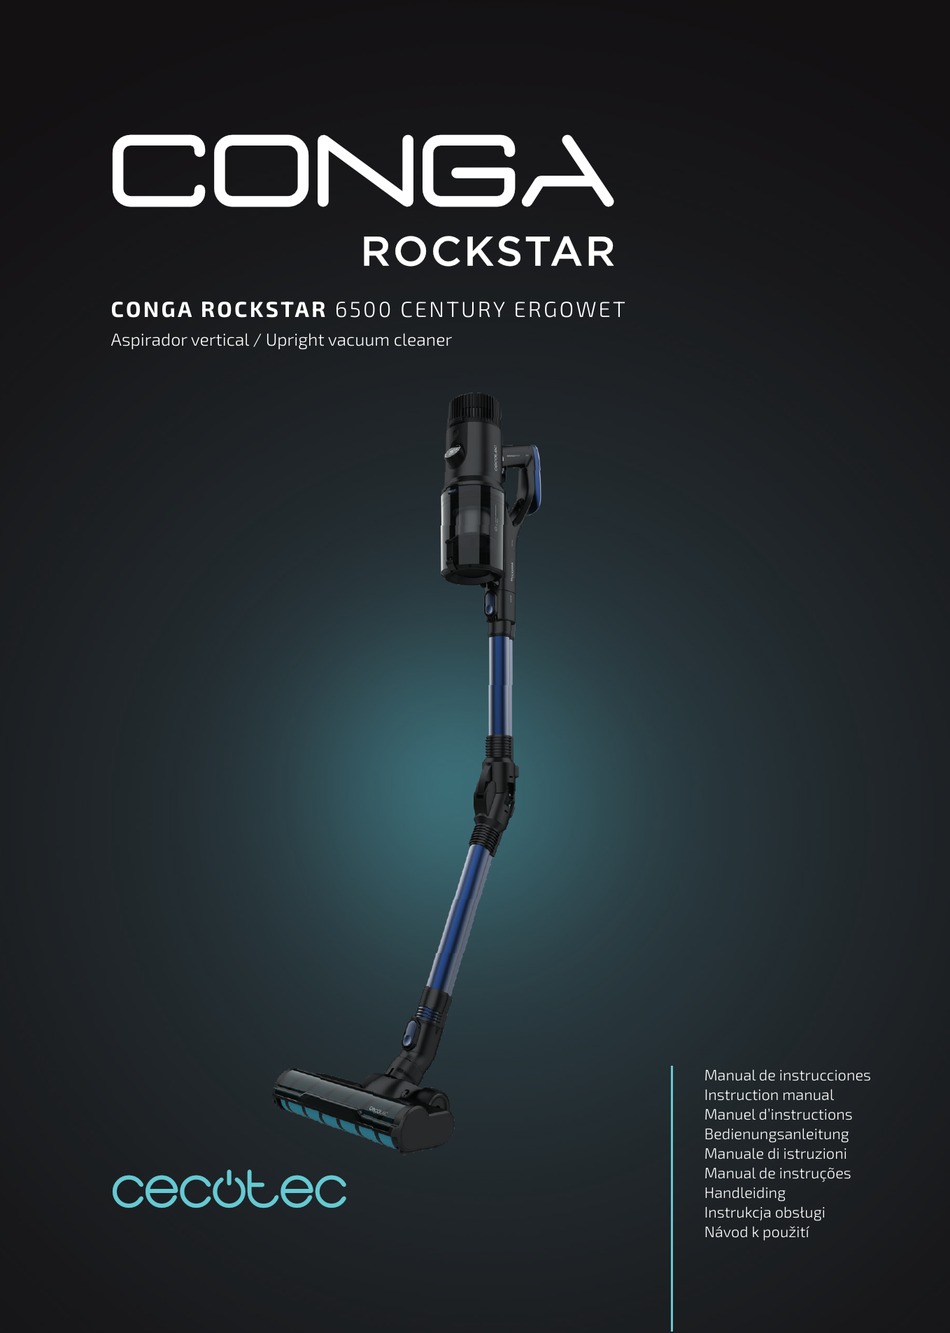 Digital motor vacuum Conga Rockstar 1500 Ultimate ErgoWet 